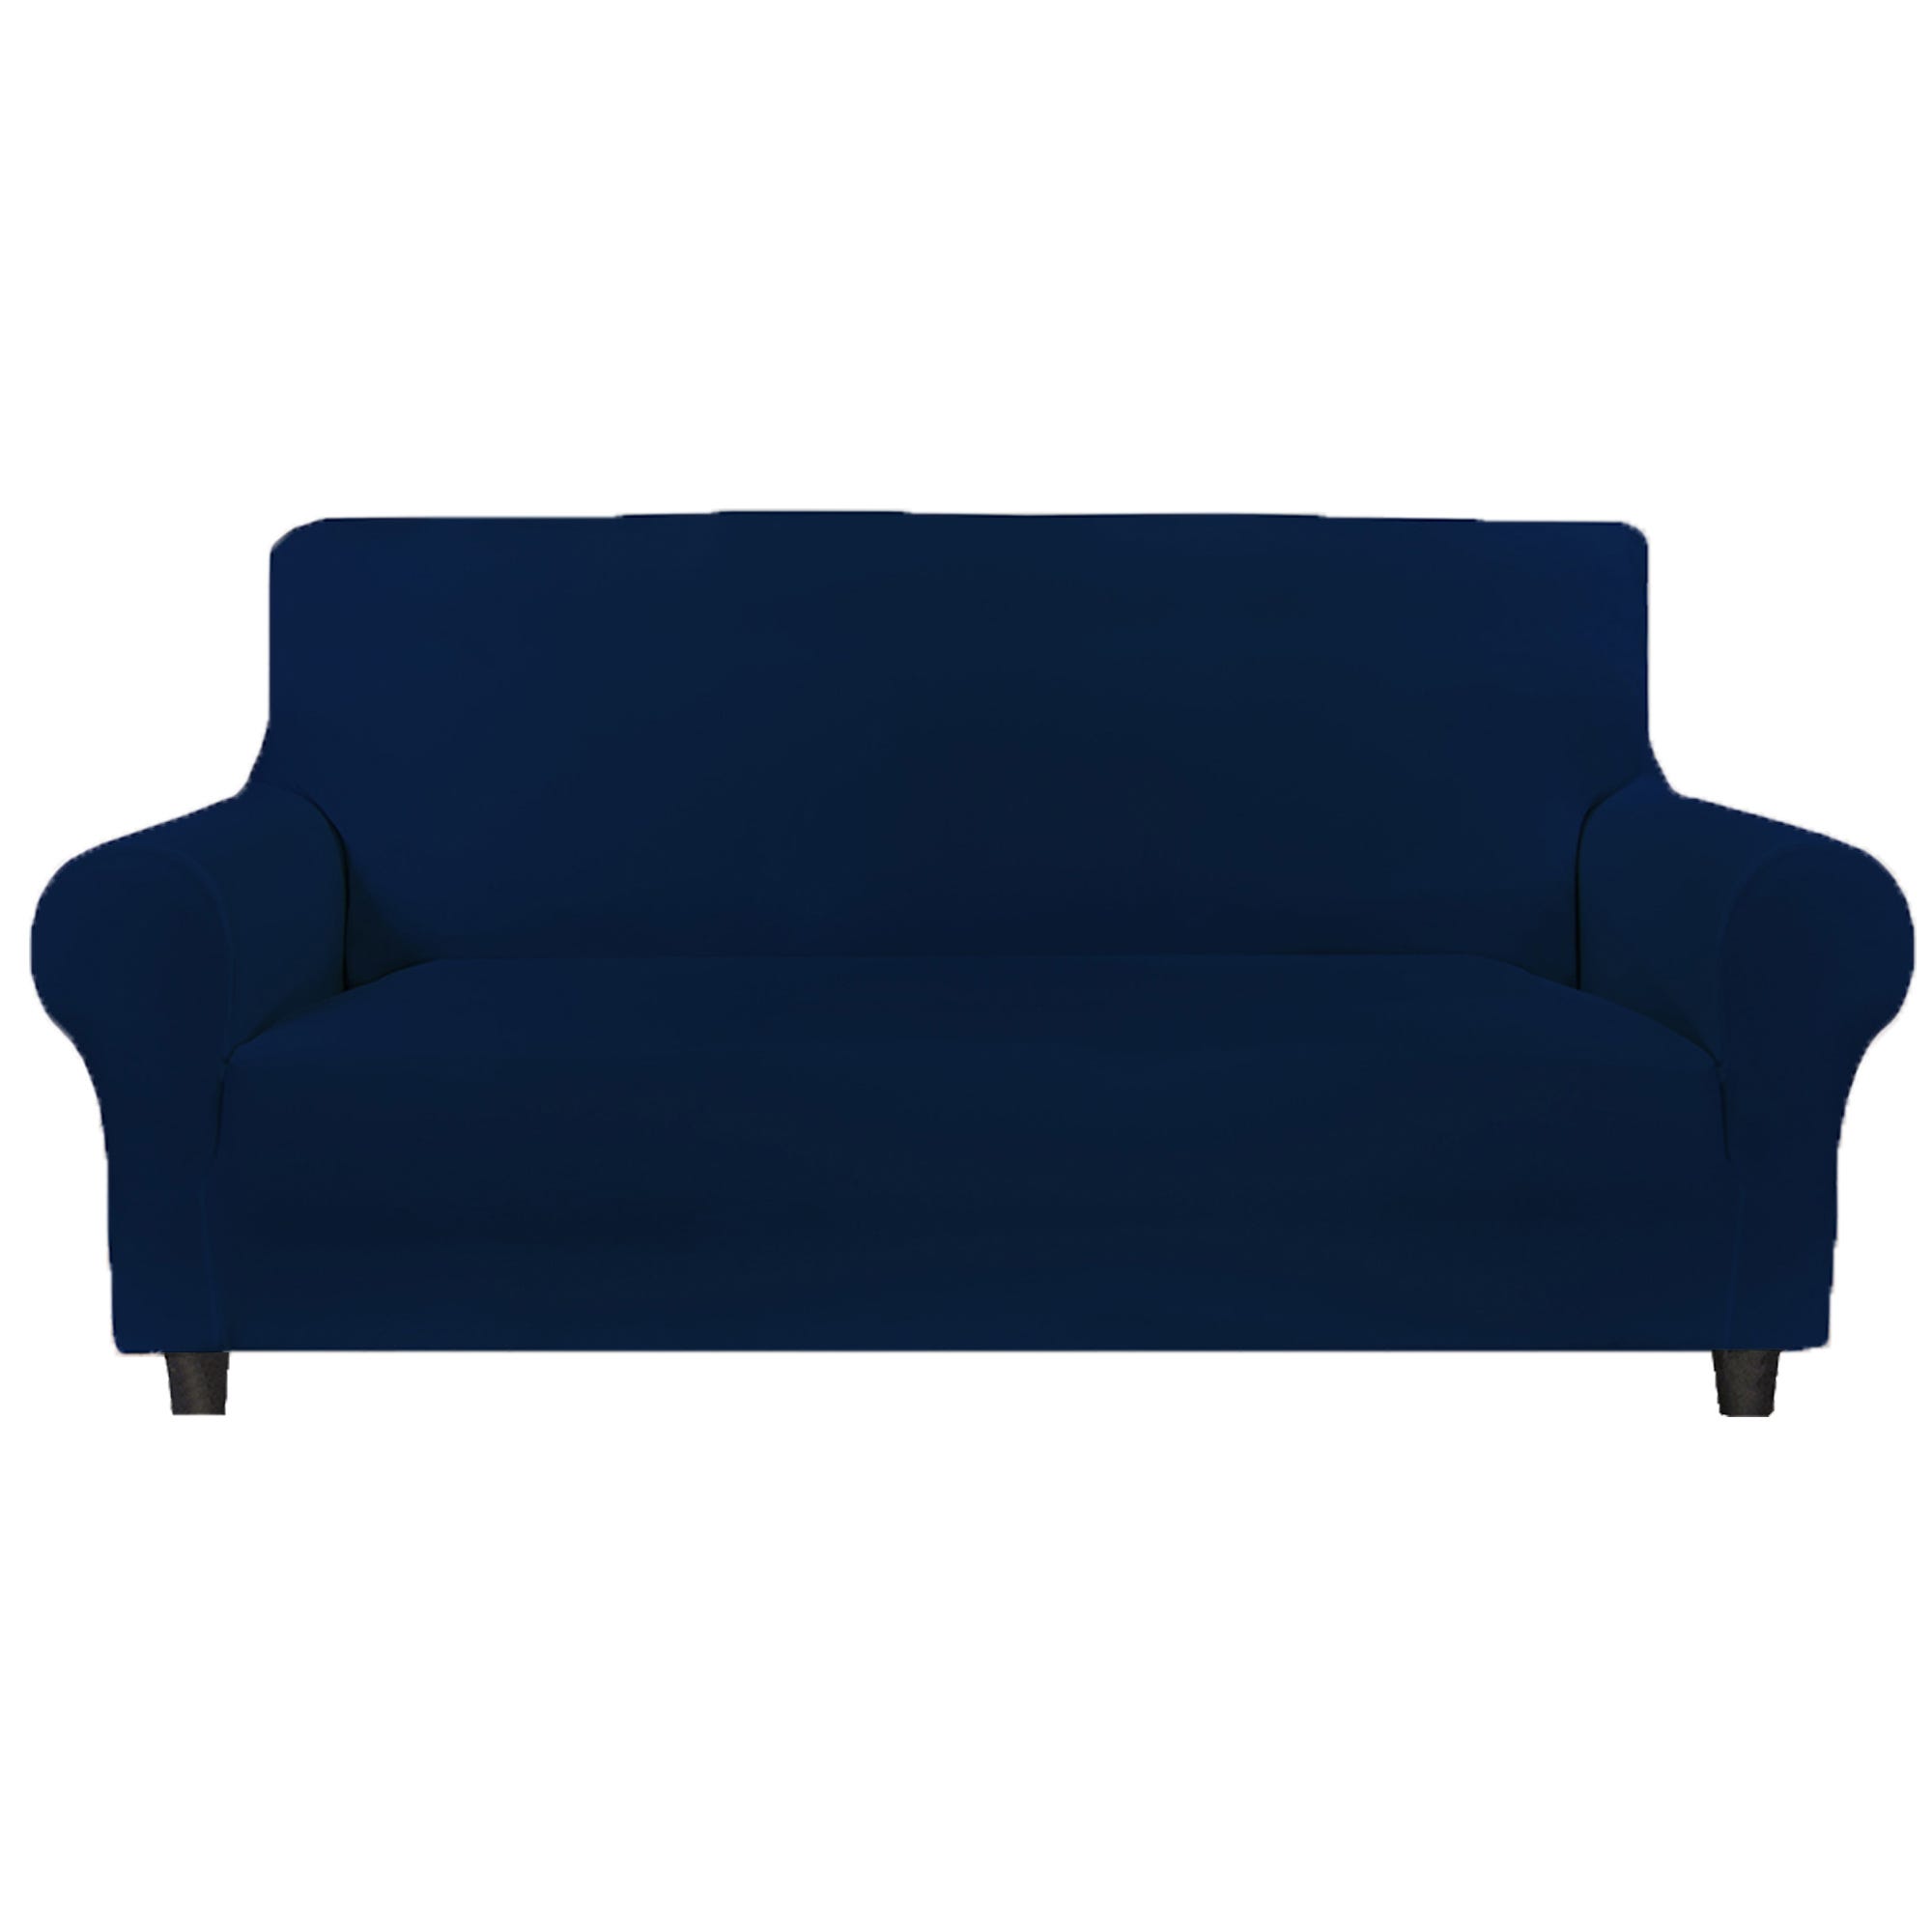 Funda de sofá elastica antimanchas pratico color liso gris